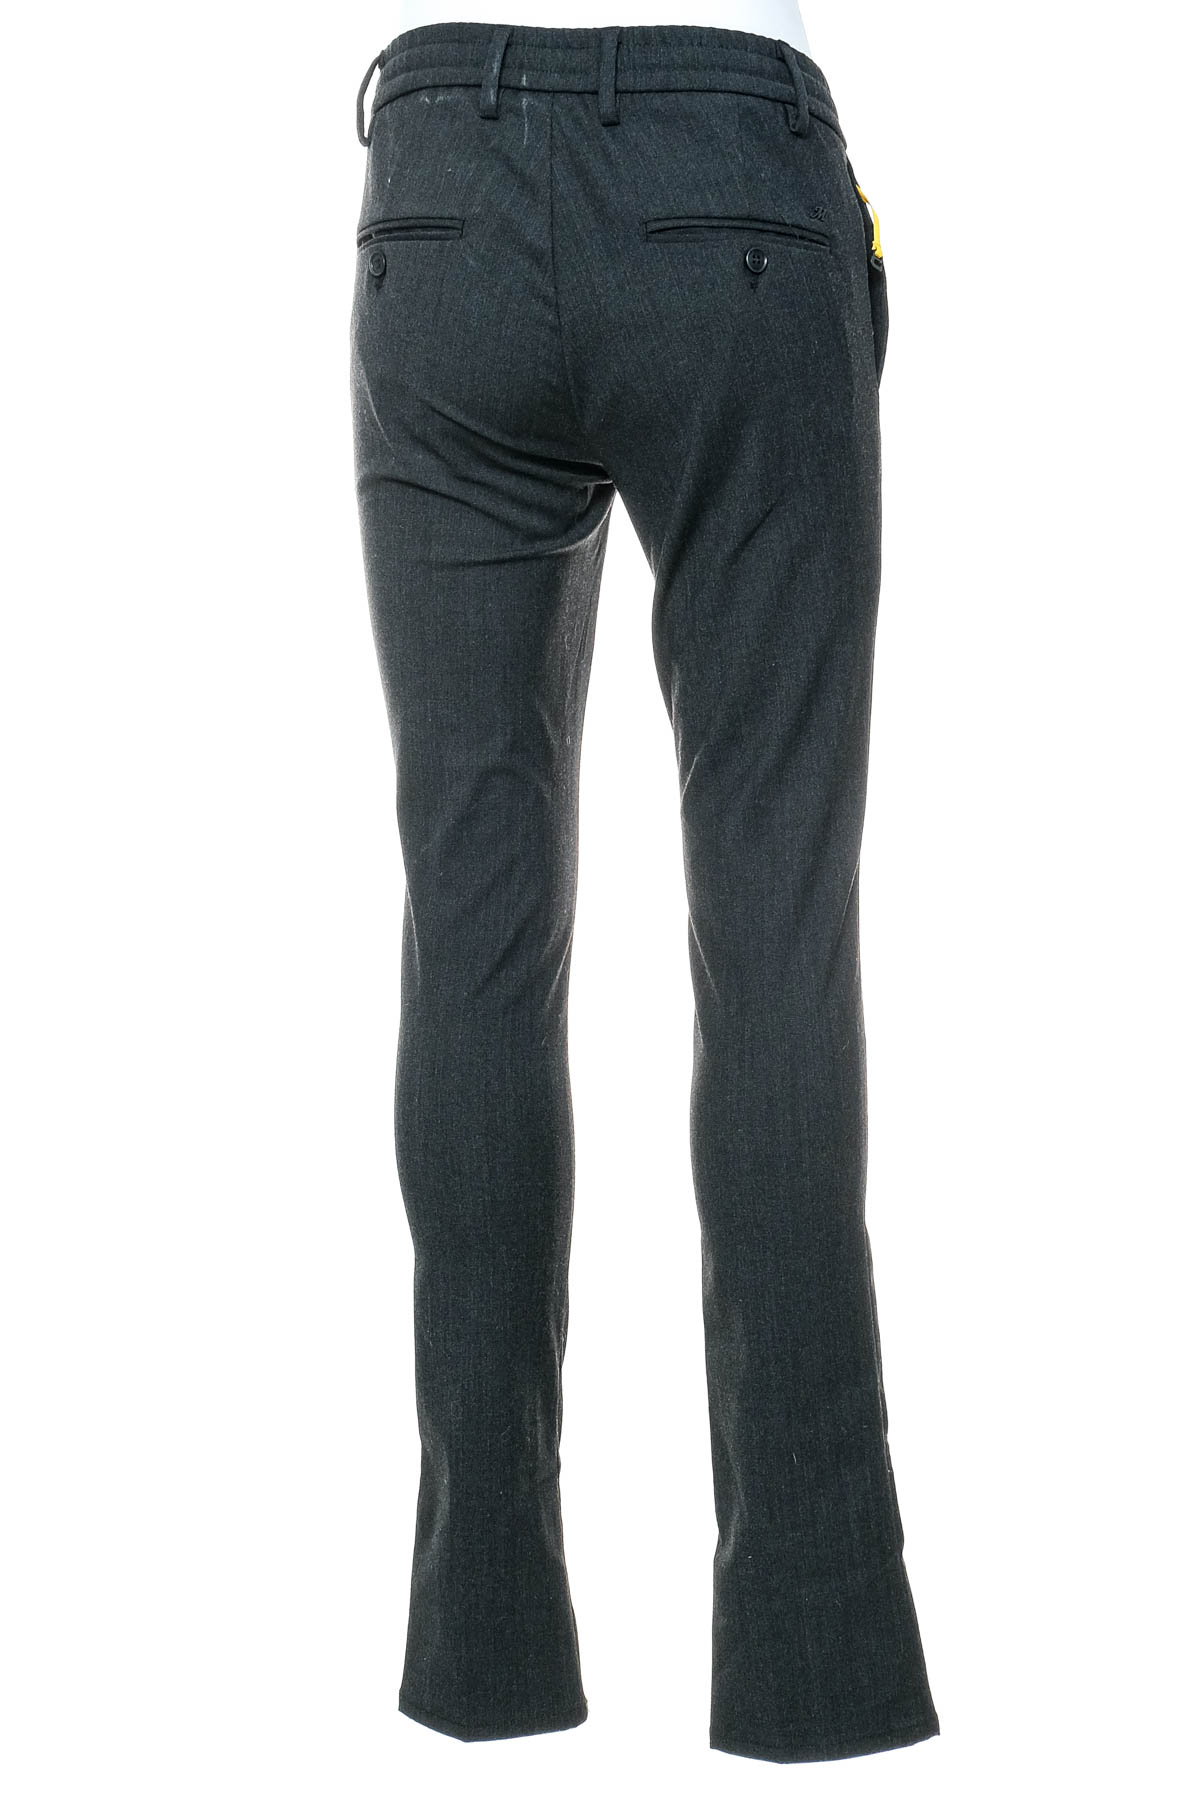 Pantalon pentru bărbați - Mason's - 1